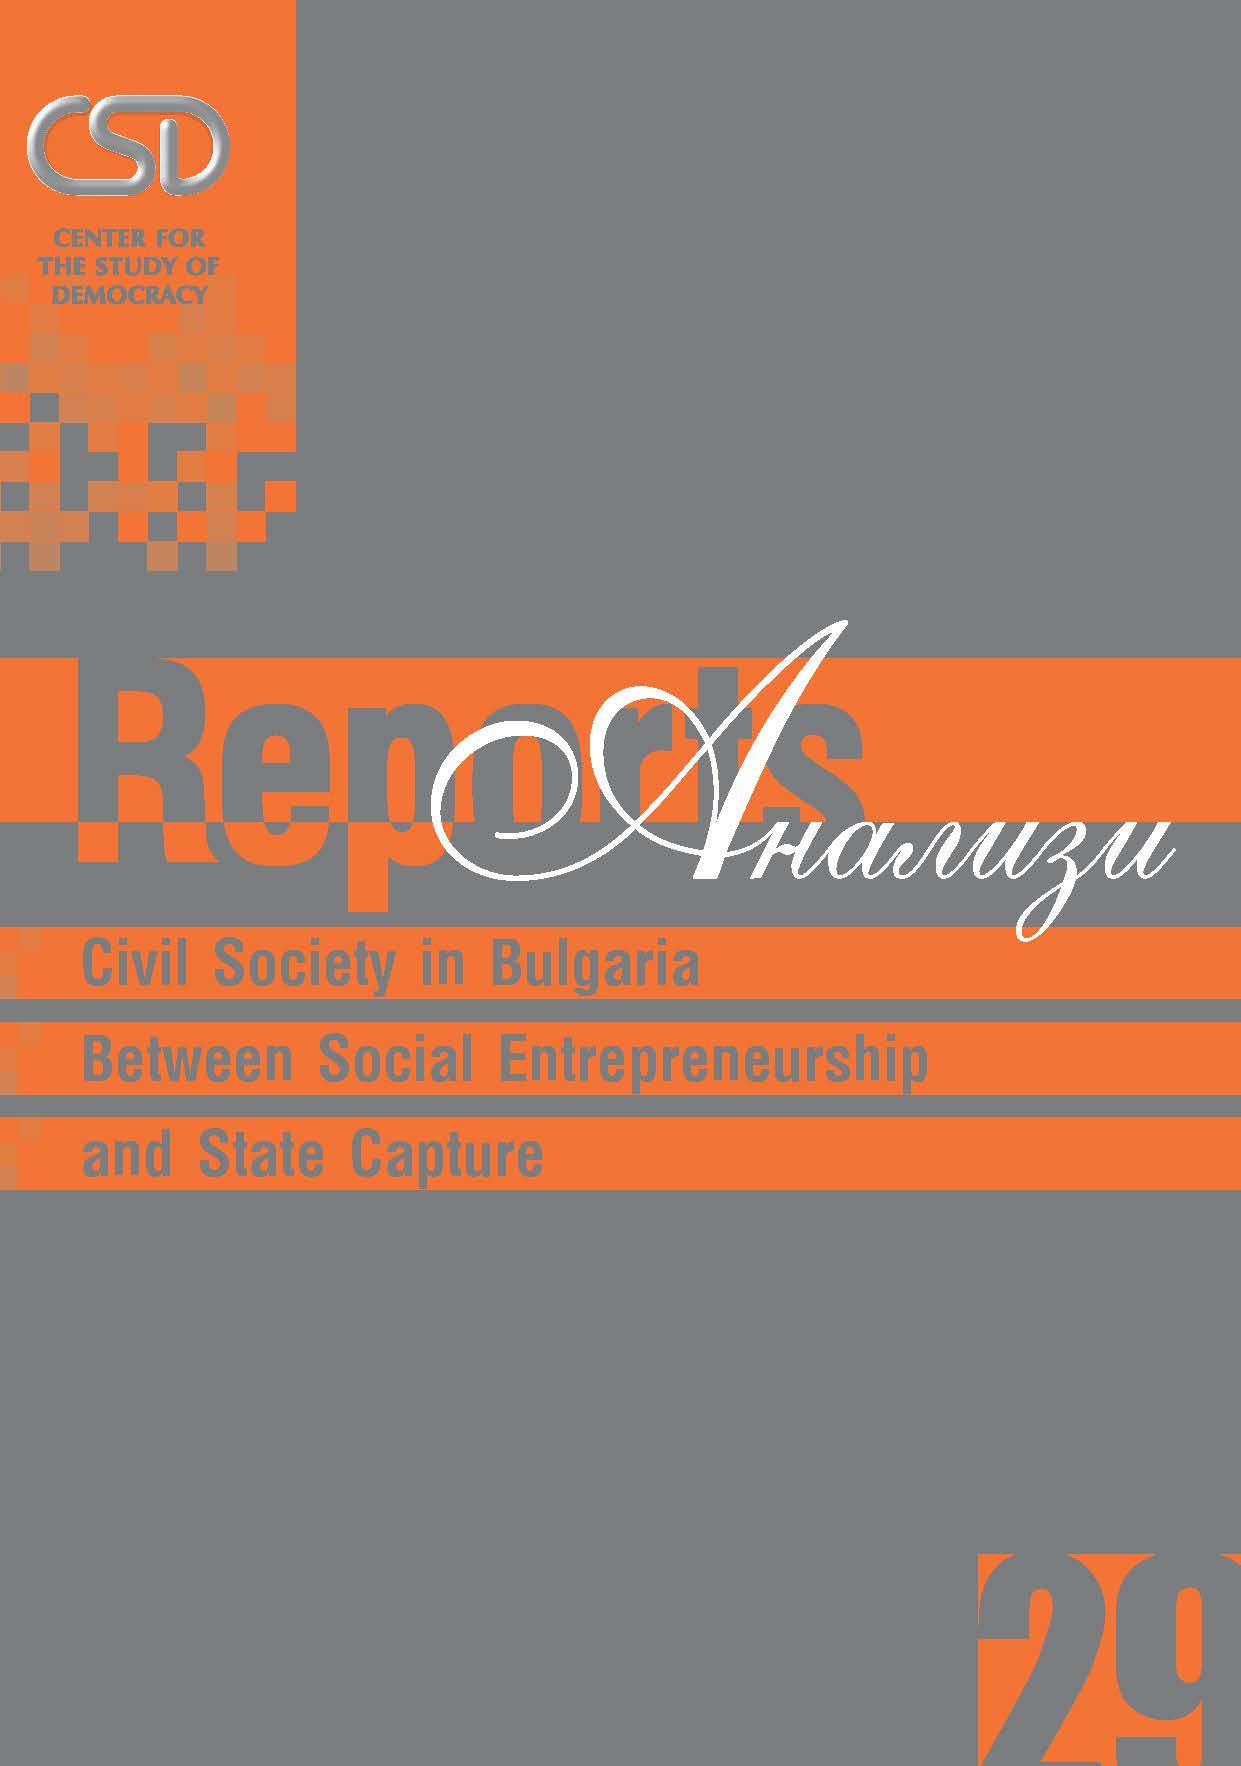 CSD-Report  29 - Civil Society in Bulgaria: Between Social Entrepreneurship and State Capture